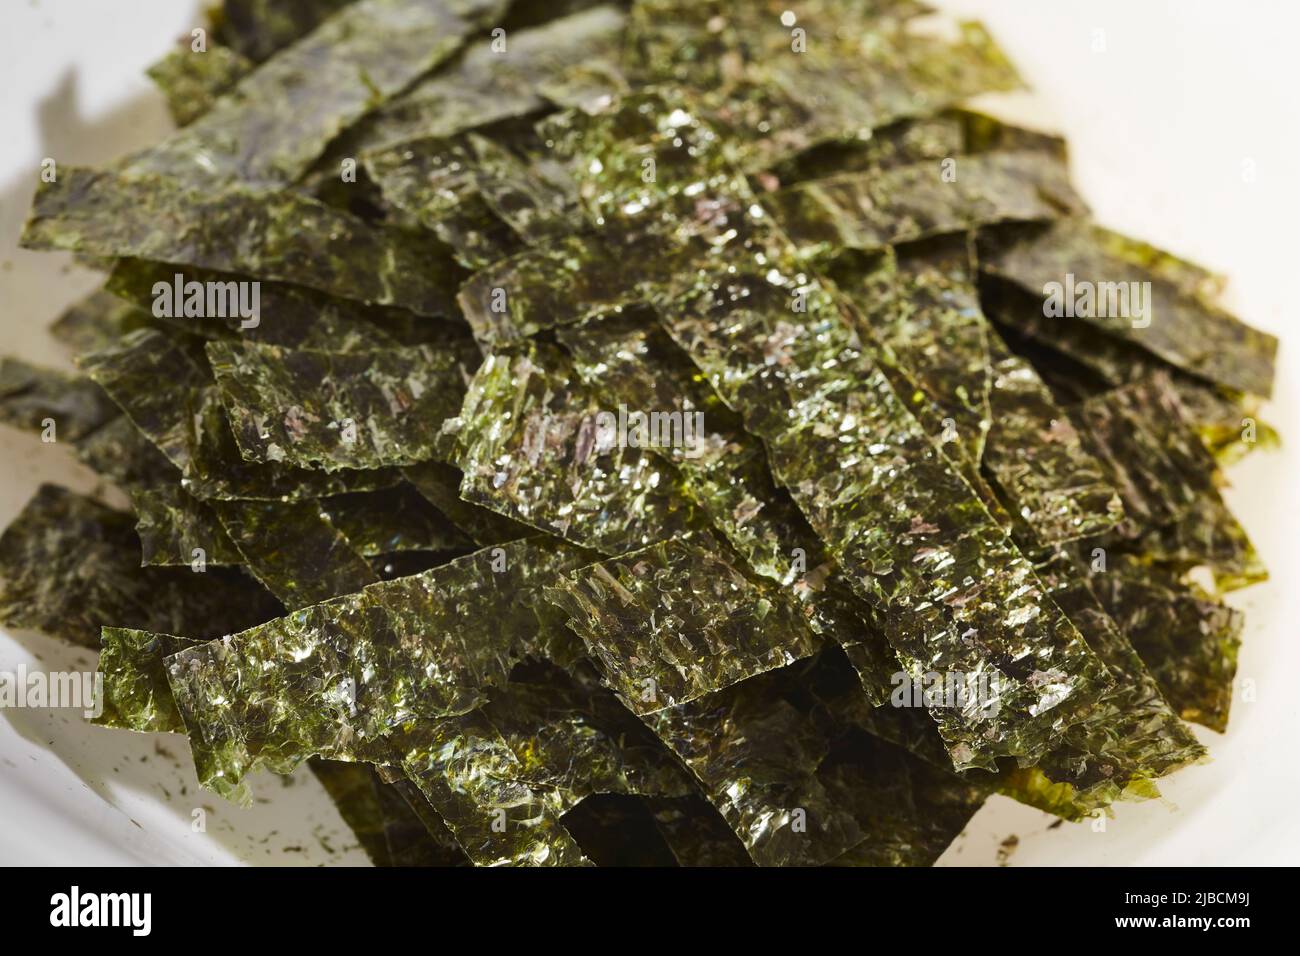 Strips of nori seaweed cut up for garnish Stock Photo